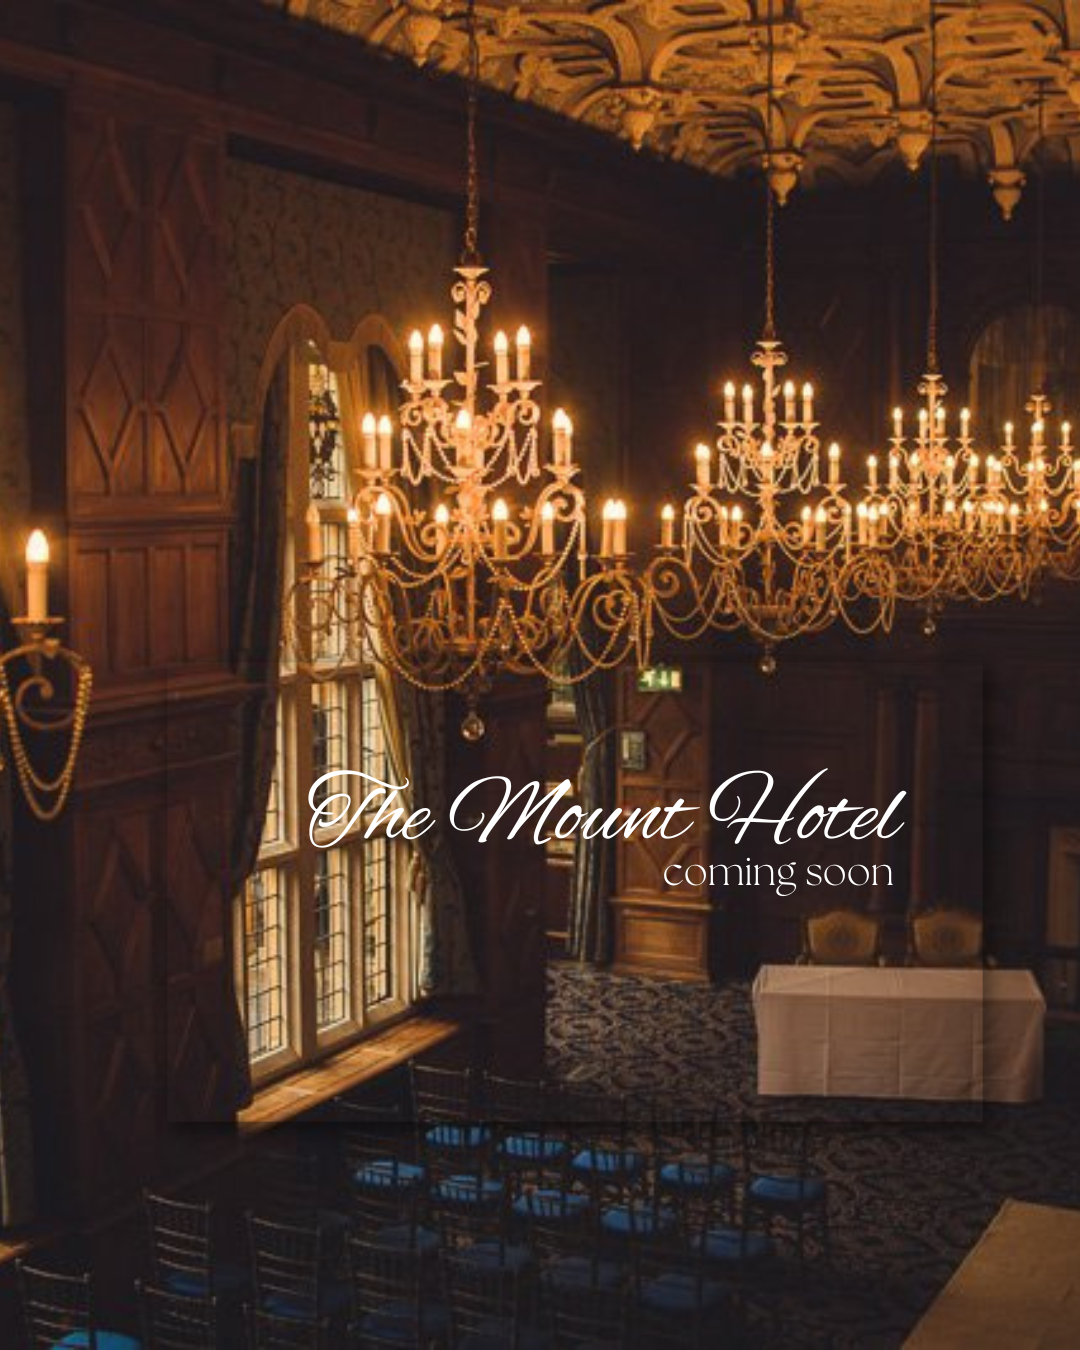 The-Mount-Hotel-Shropshire-Wedding-Venue.png